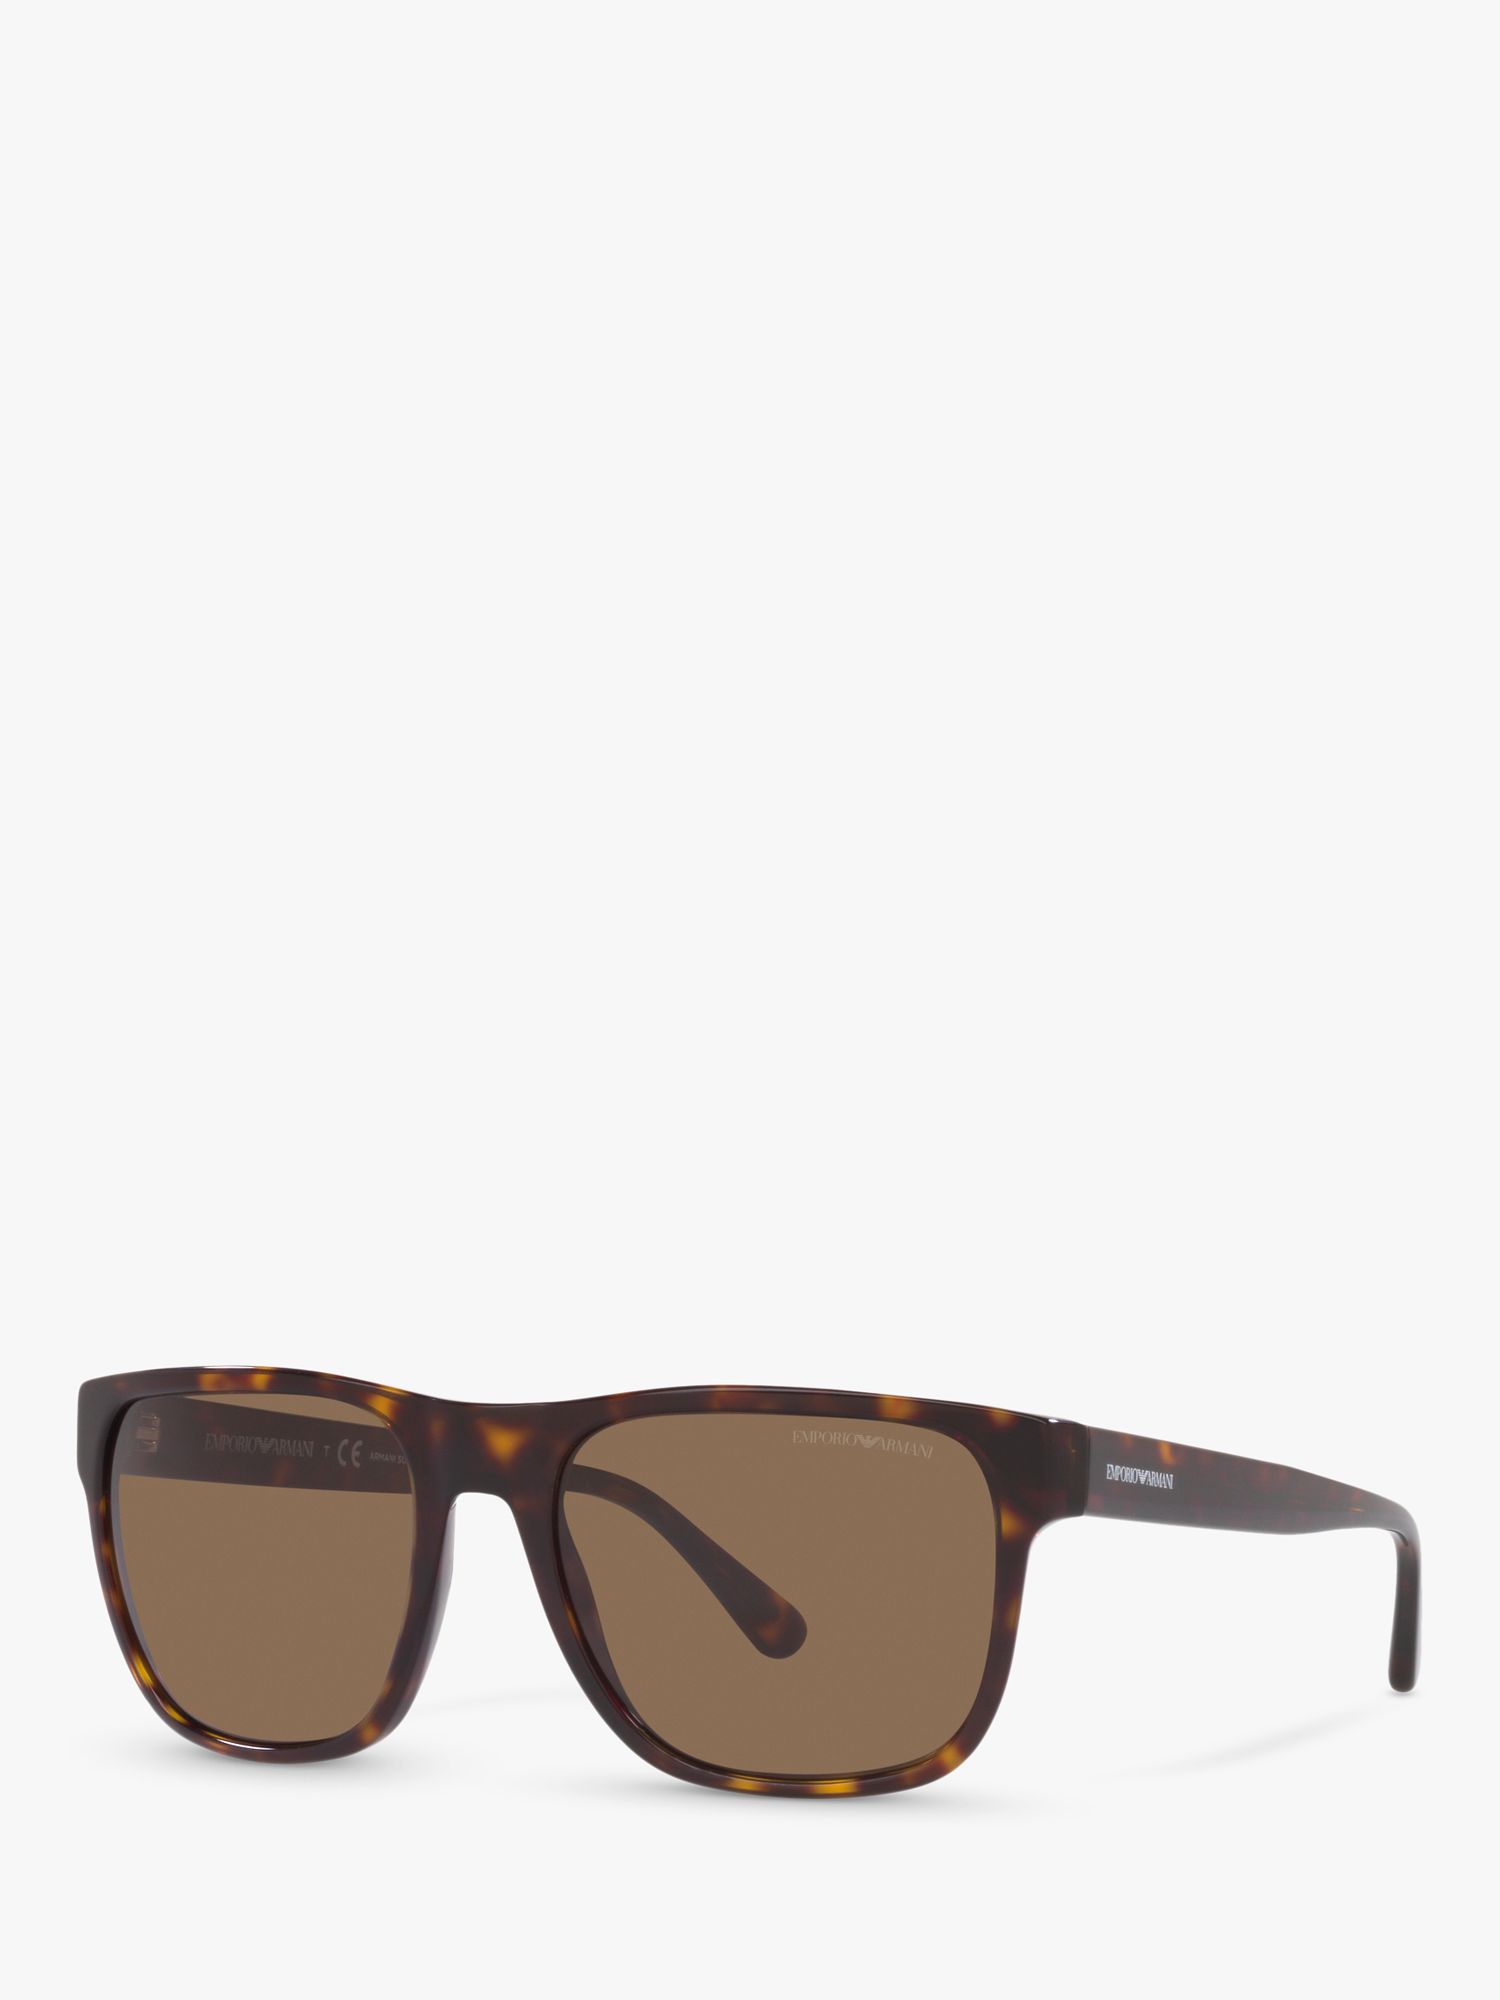 Emporio Armani EA4163 Men's Square Sunglasses, Tortoise/Brown Gradient at  John Lewis & Partners